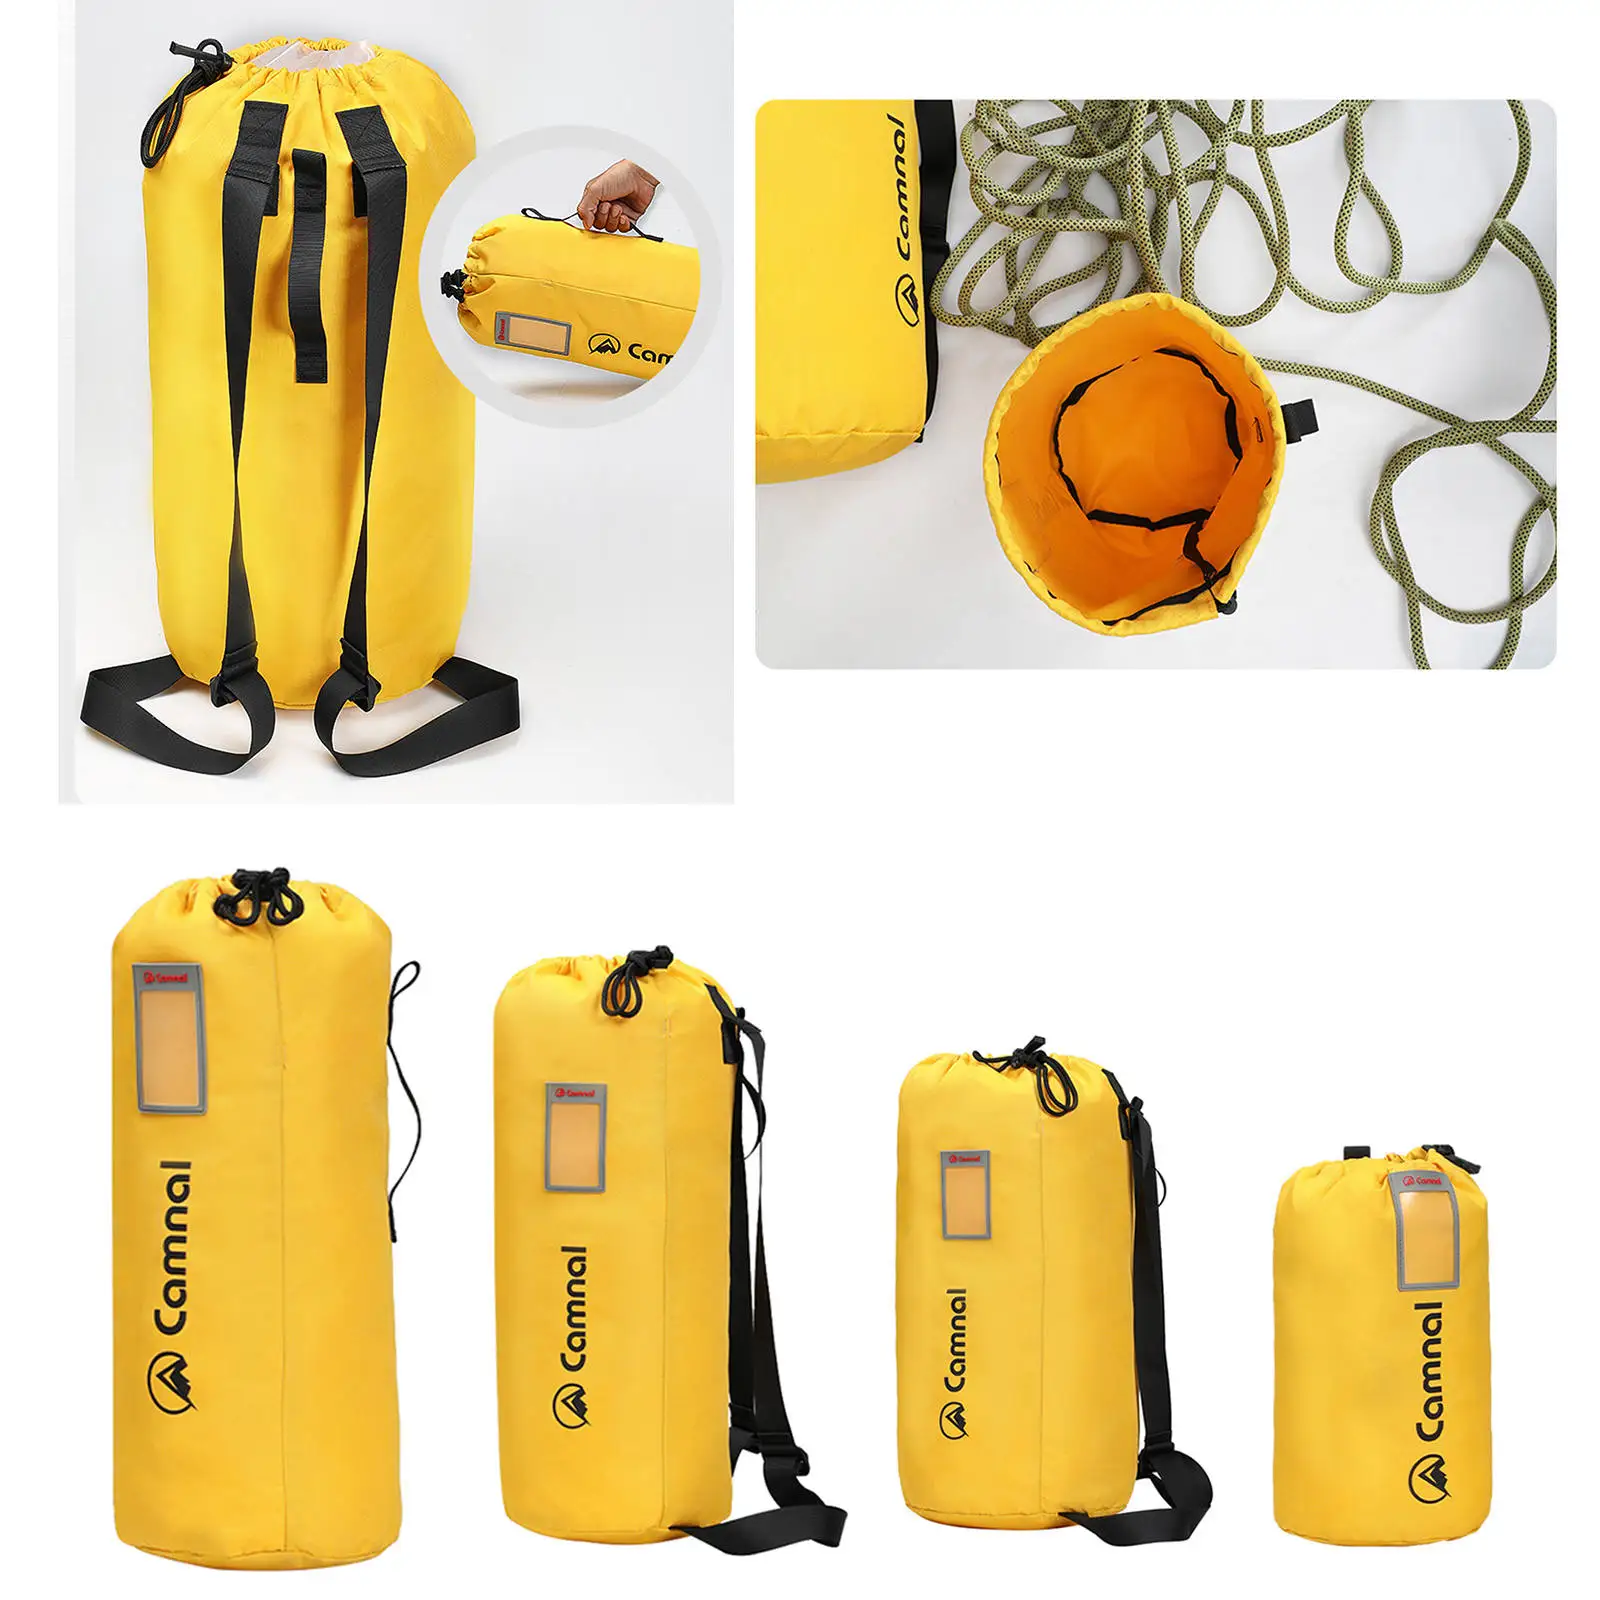 Rock Rope Storage Bag - Rock and Tree Climbing Equipment, Arborist Gear, Bucket Style Backpack, Waterproof Material